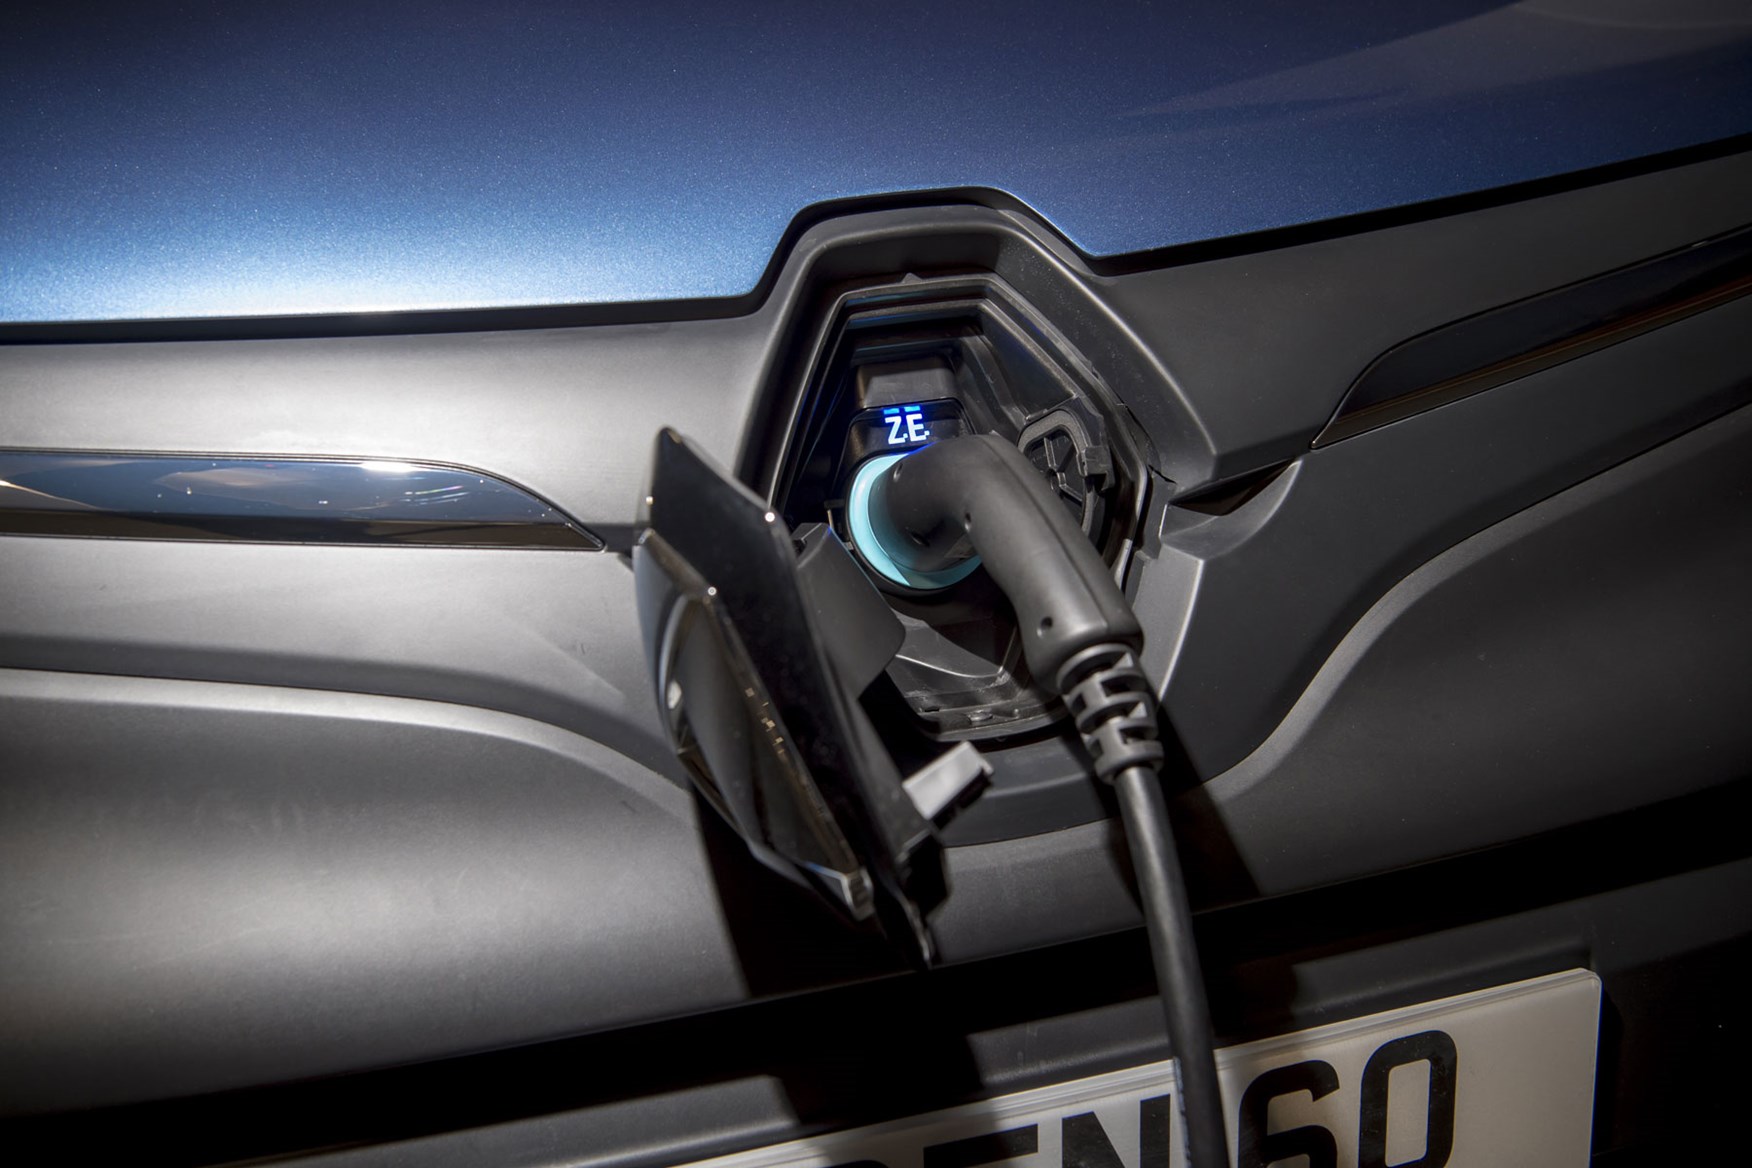 Renault Kangoo ZE review 2020 - charging port in nose under badge